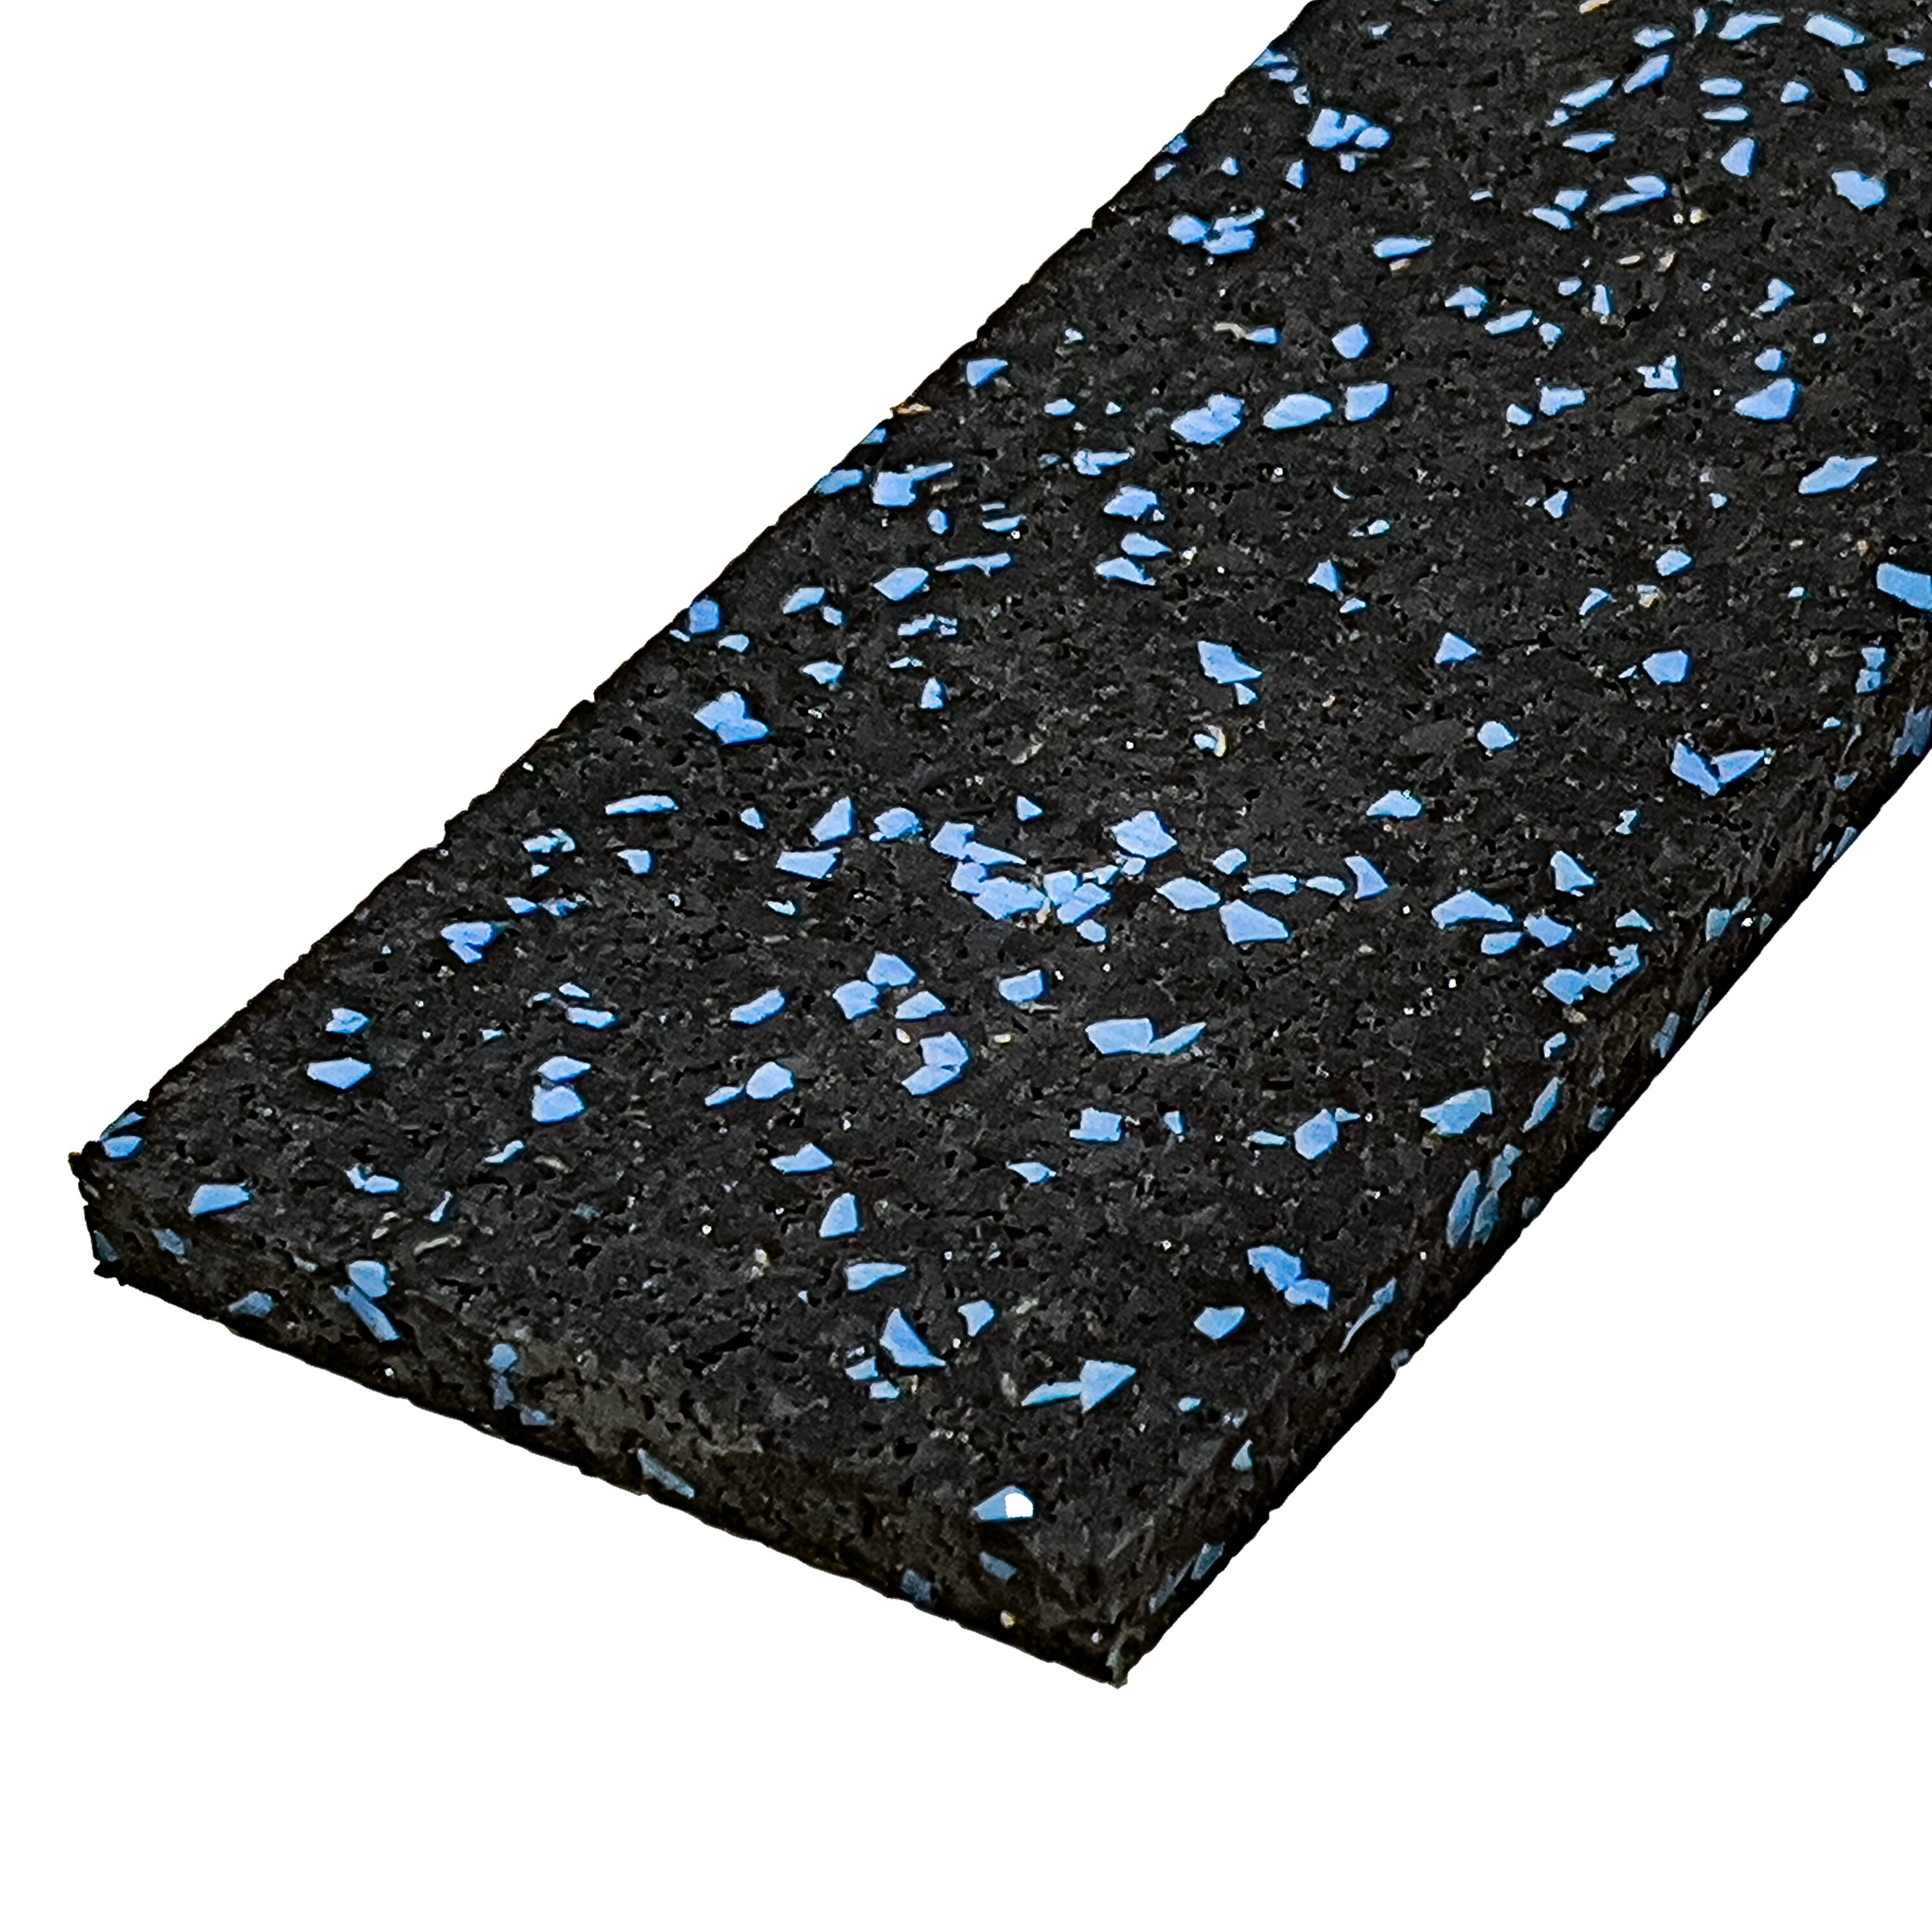 Čierno-modrá gumová soklová podlahová lišta FLOMA FitFlo IceFlo - dĺžka 200 cm, šírka 7 cm, hrúbka 0,8 cm